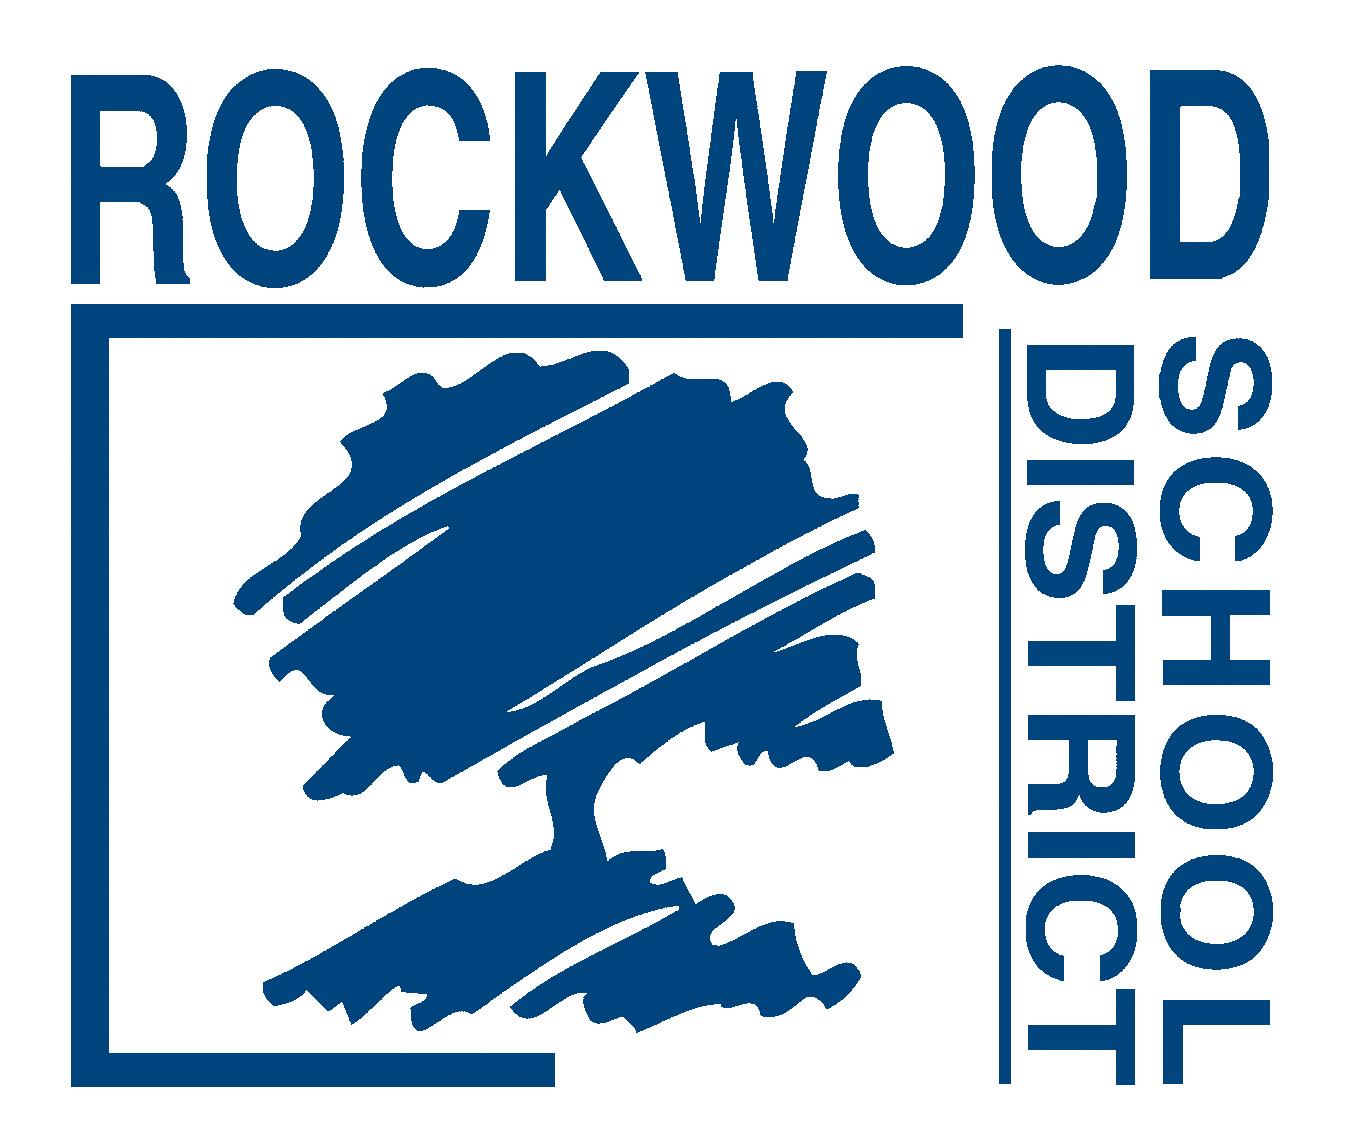 Rockwood Logo - Rockwood School District - MySci